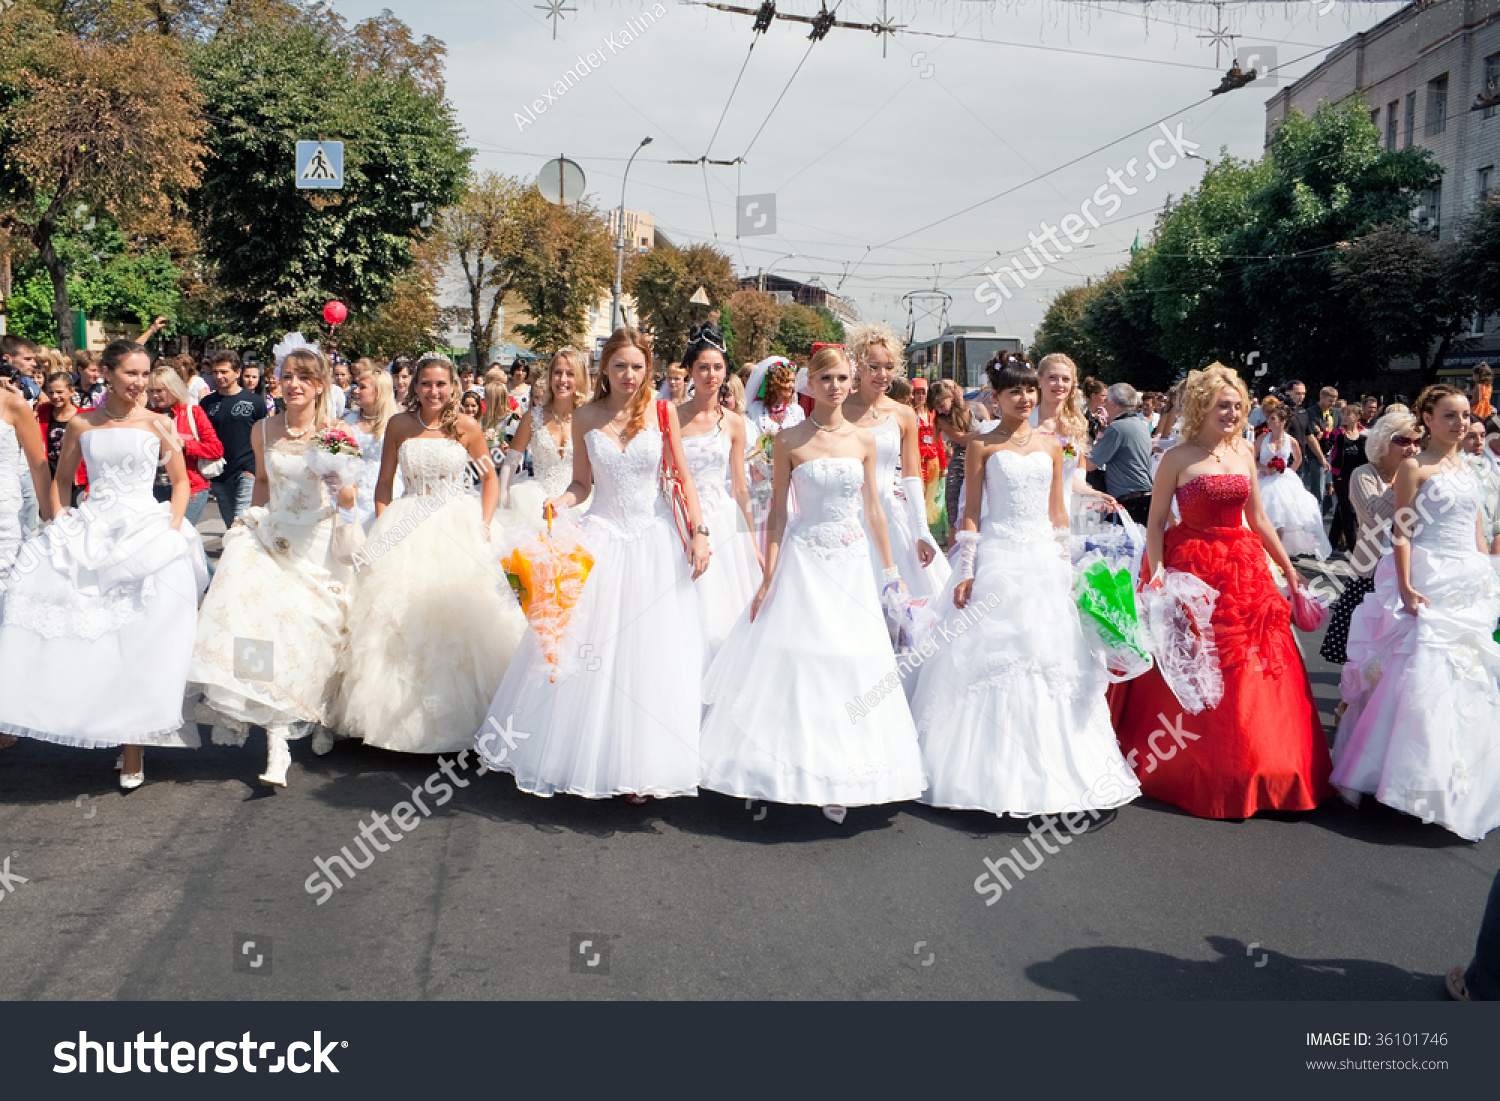 City-of-brides